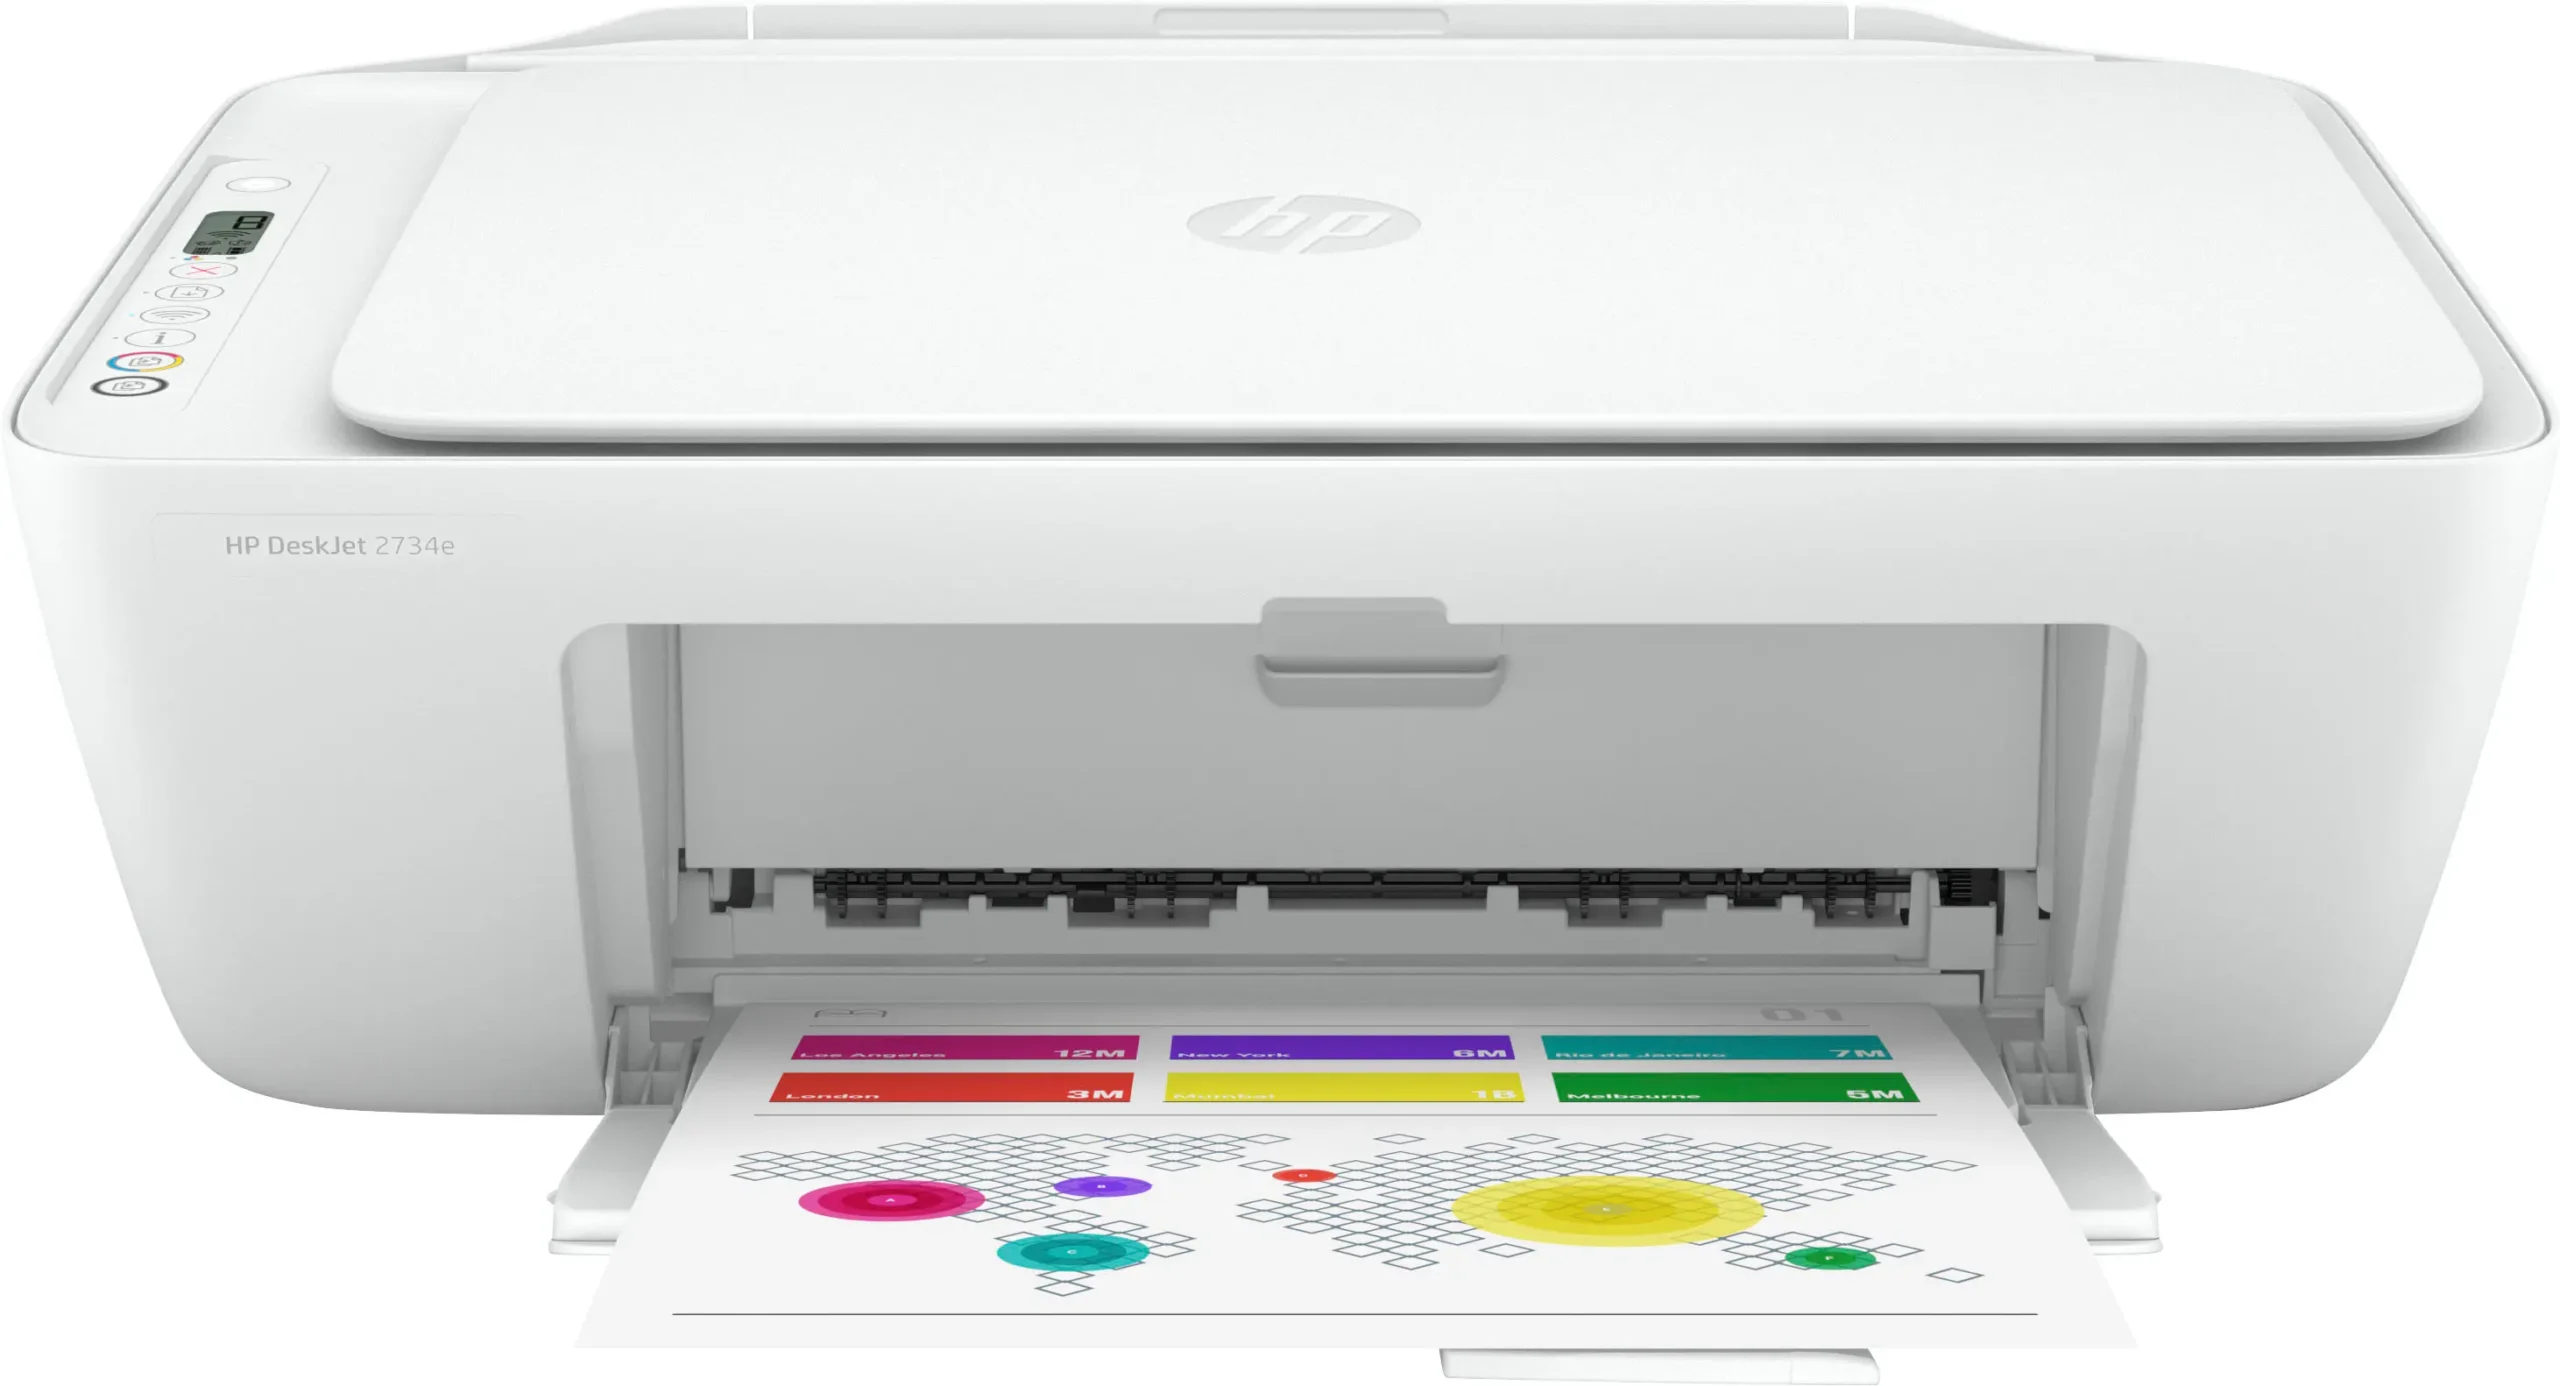 hewlett packard printer updates - Do printers need software updates